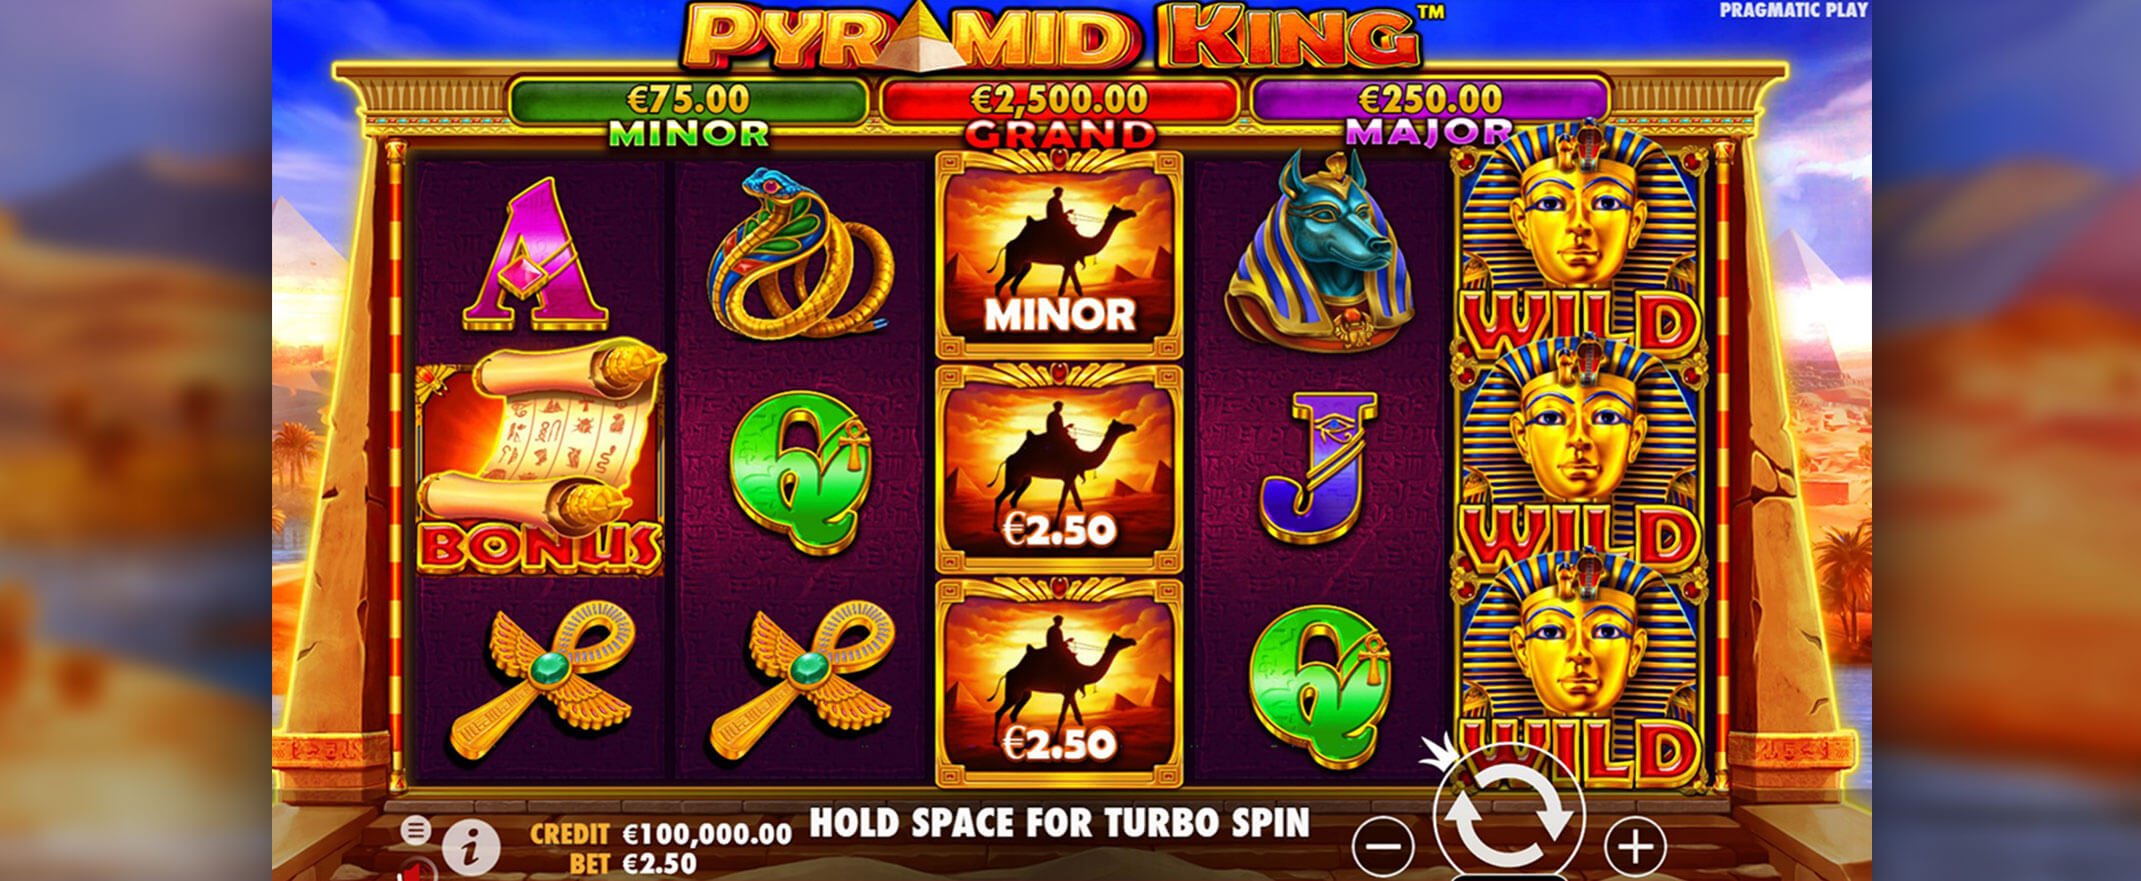 Pyramid King Spielautomaten Bewertung